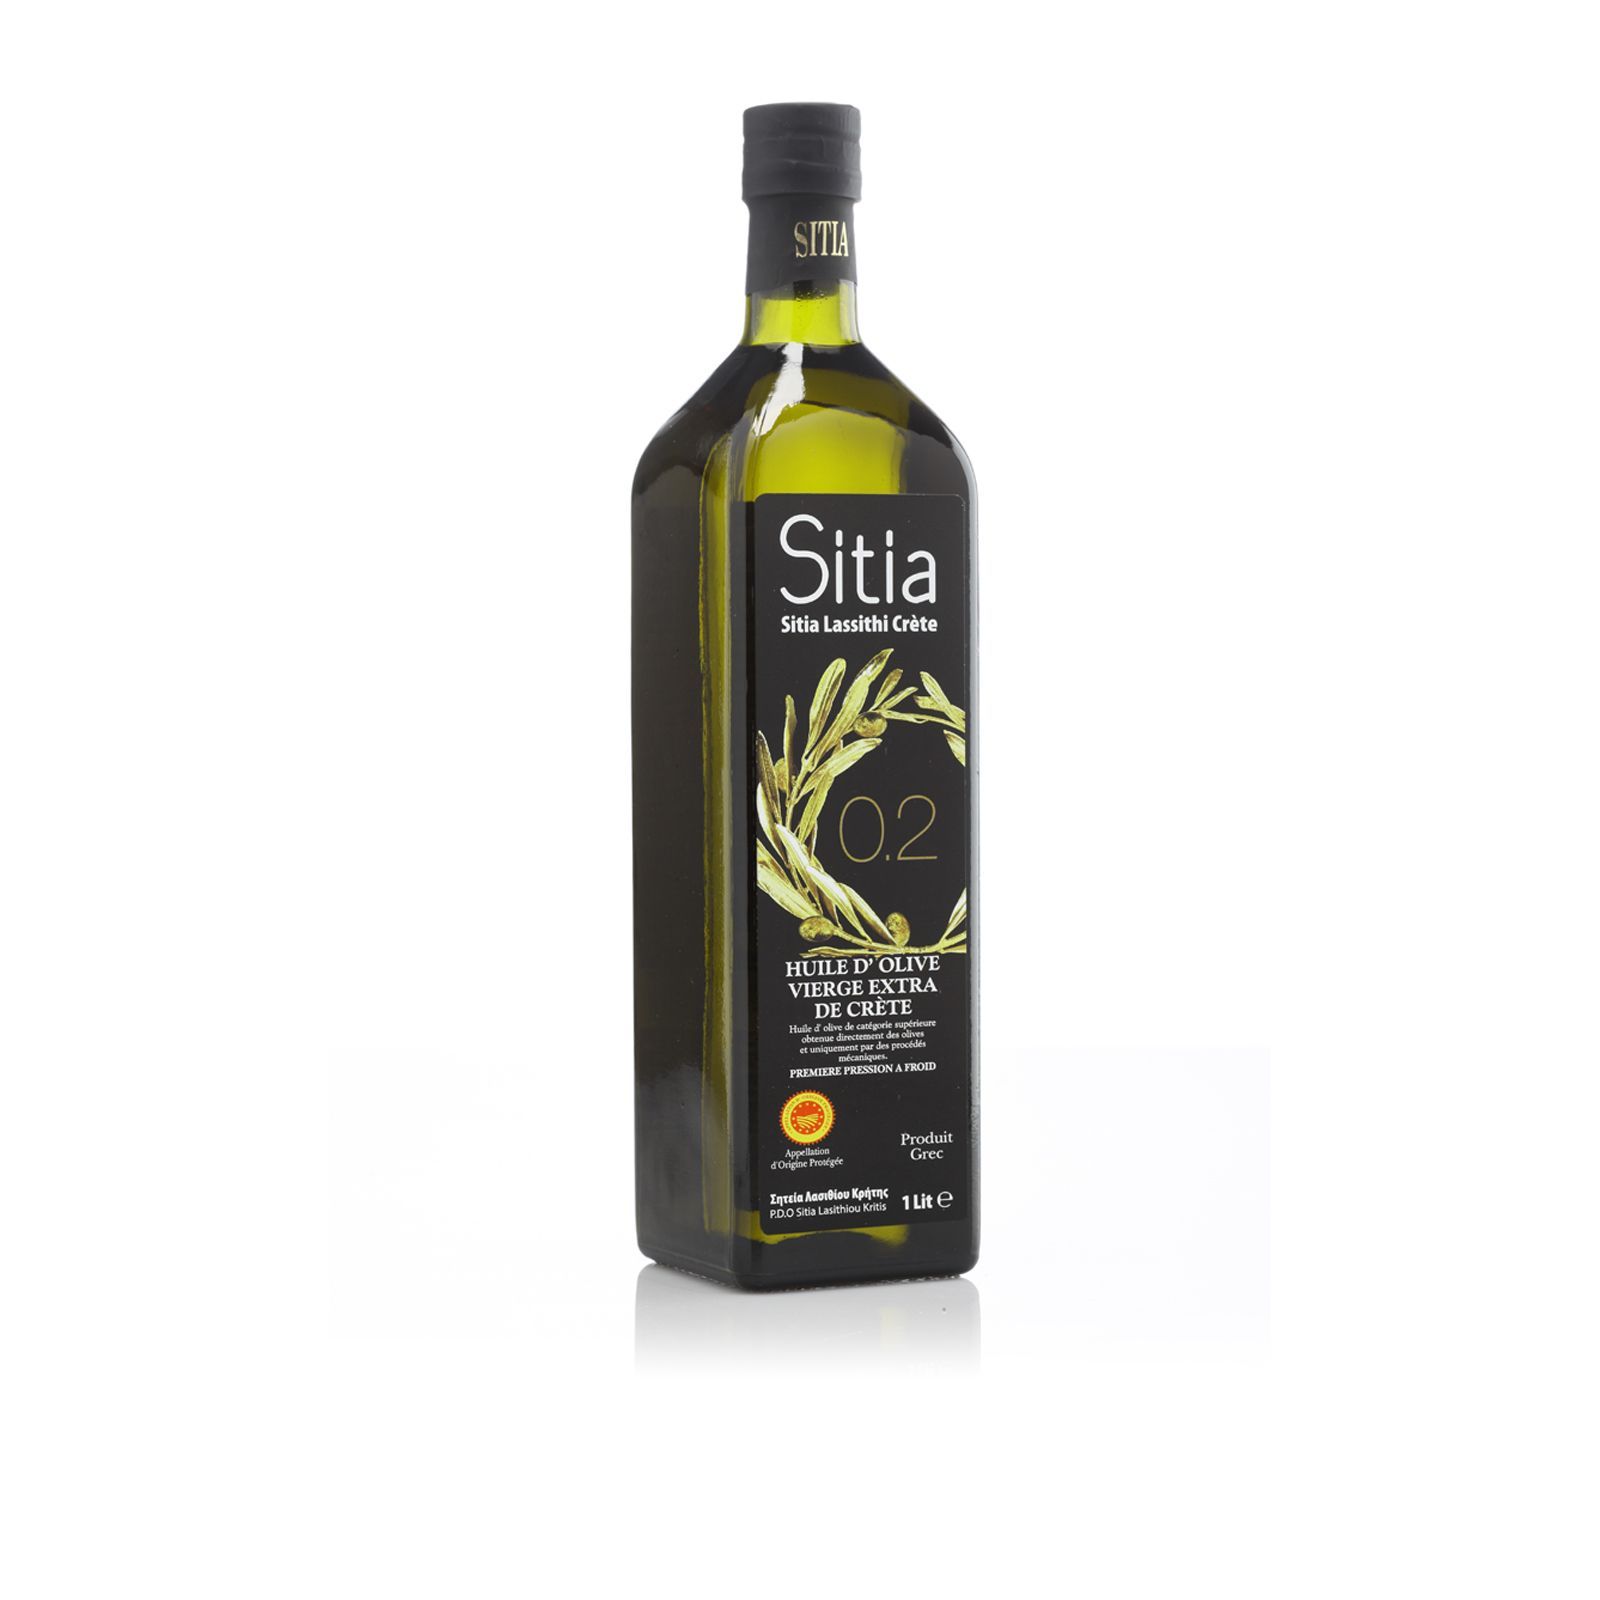 Беру оливковое масло. Оливковое масло p.d.o. Sitia 02 Extra Virgin, 1л. Оливковое масло Extra Virgin 0,2% Sitia p.d.o. 0,5л. Sitia масло оливковое Extra Virgin 0,1-0,2%. Масло оливковое Sitia Extra Virgin 5л.